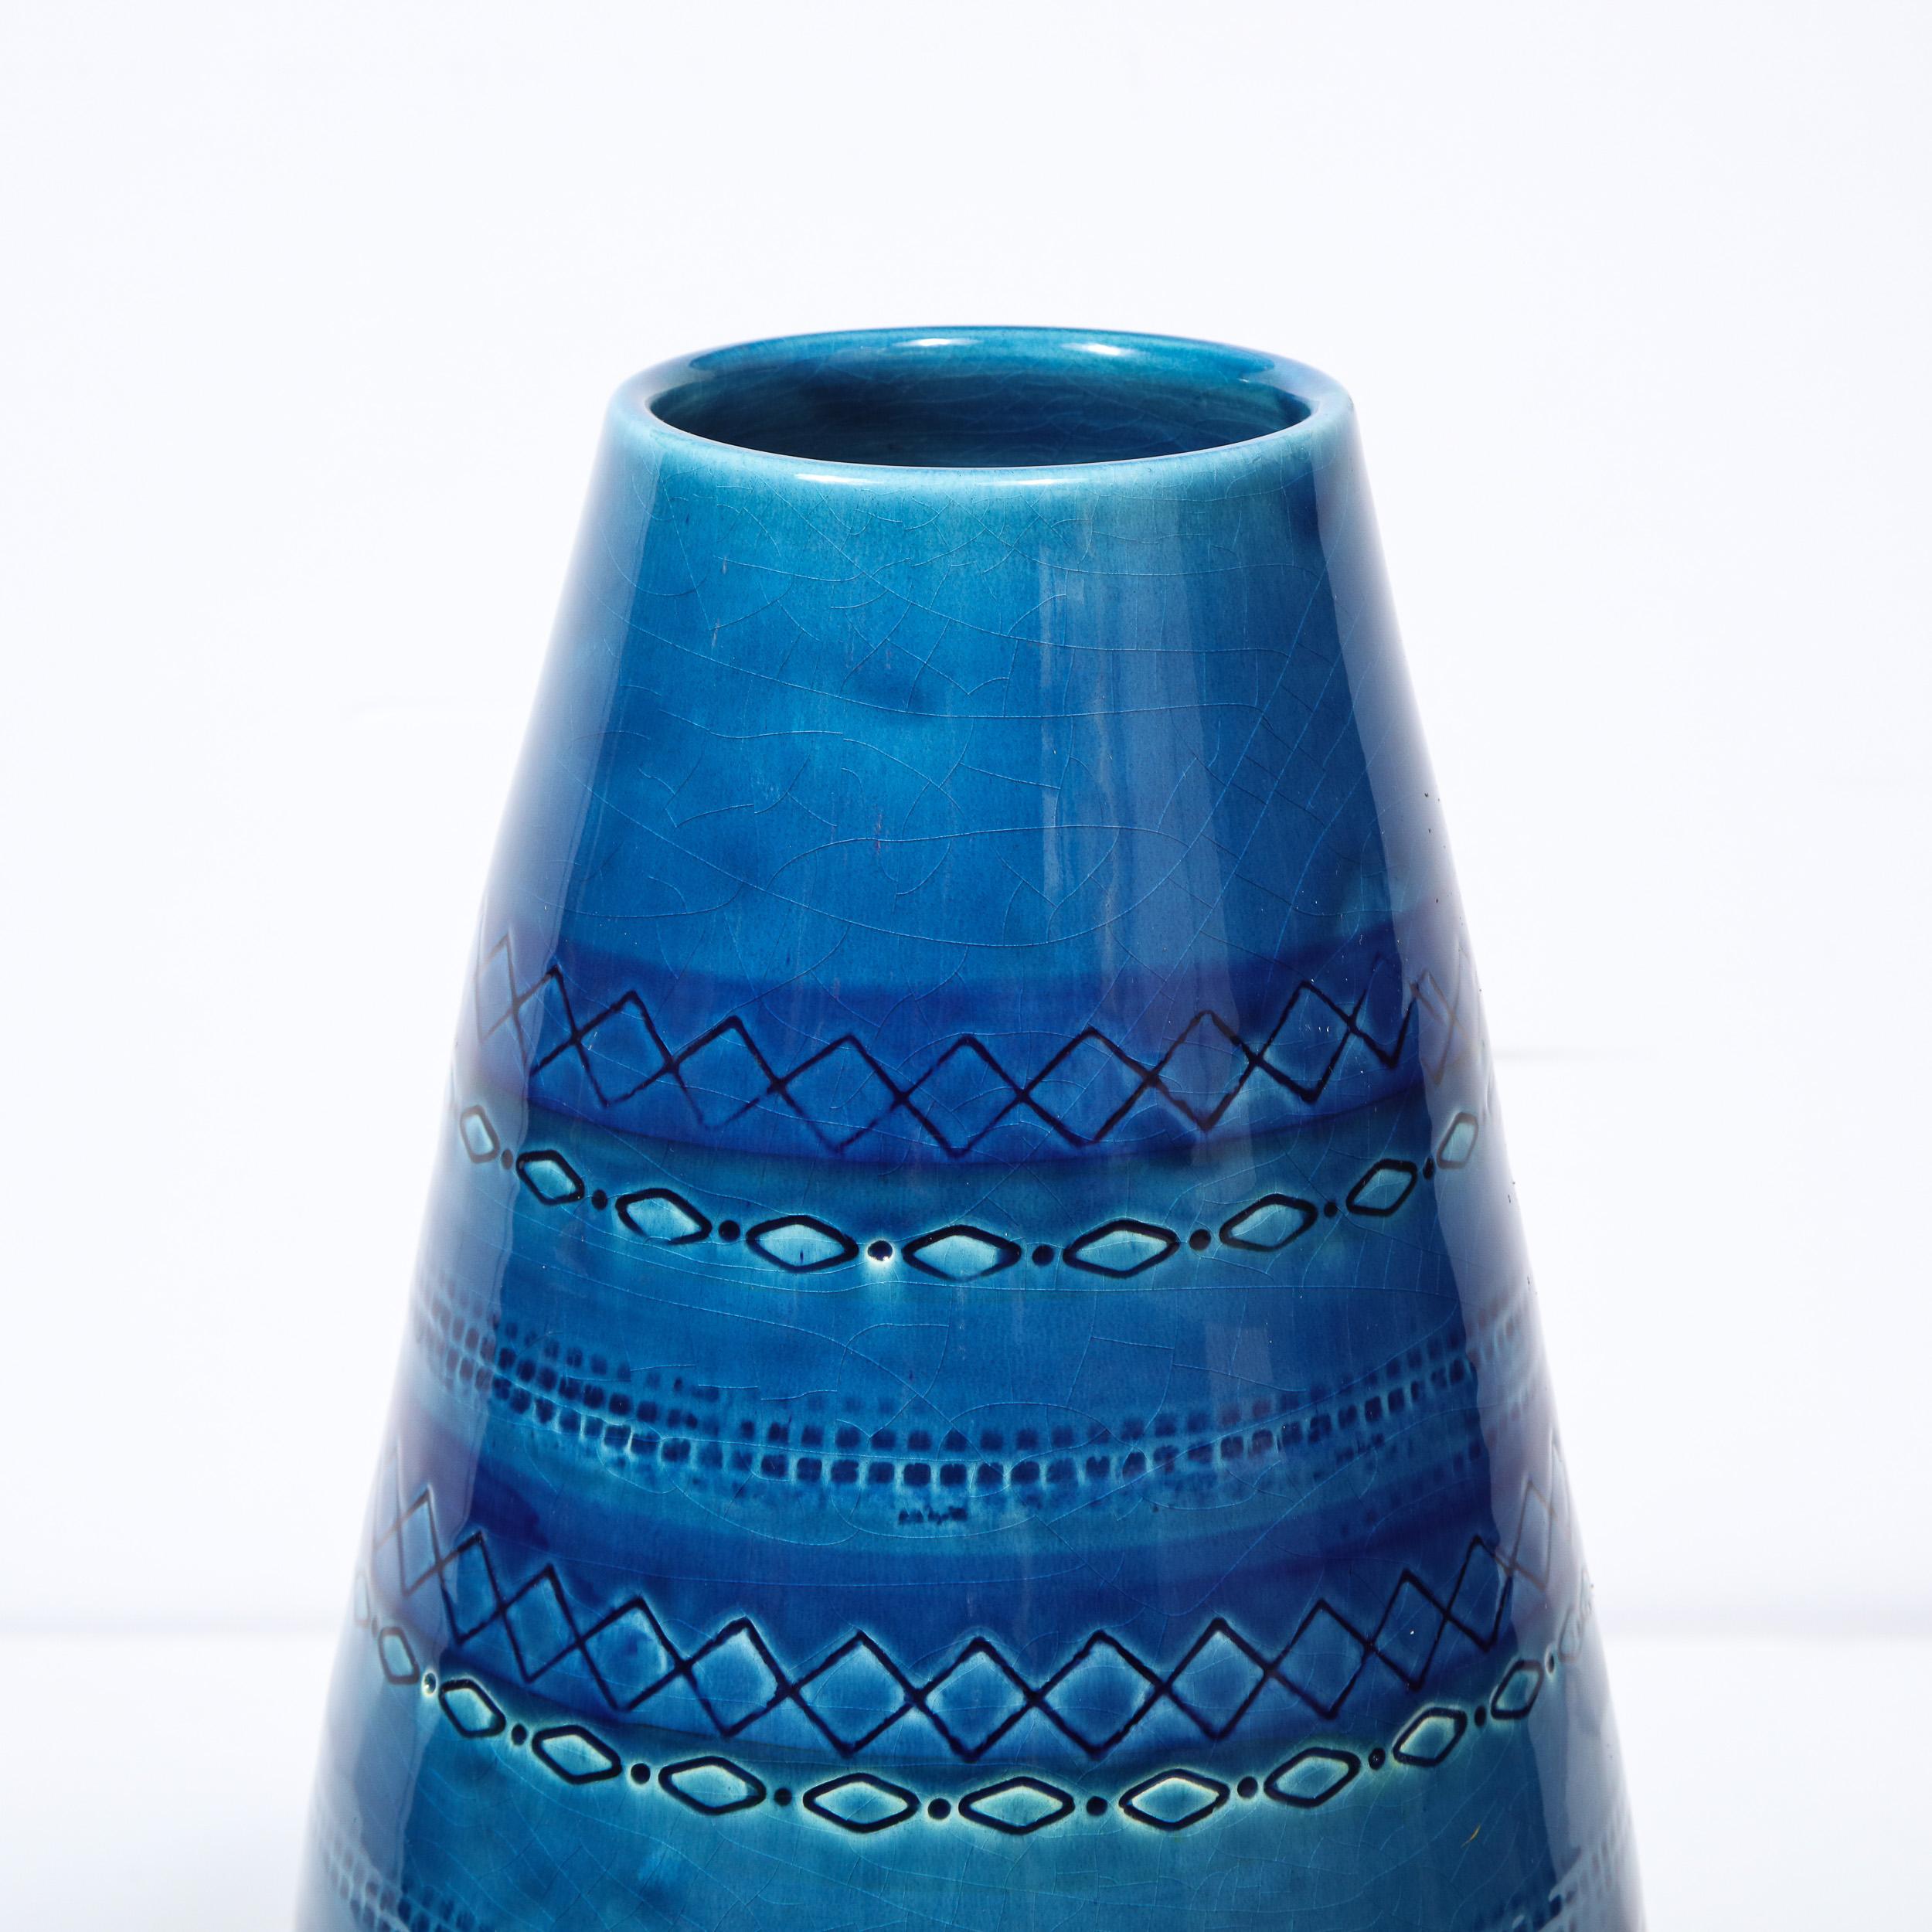 Mid-Century Modern Conical Azure Blue Ceramic Vase with Geometric Detailing 1